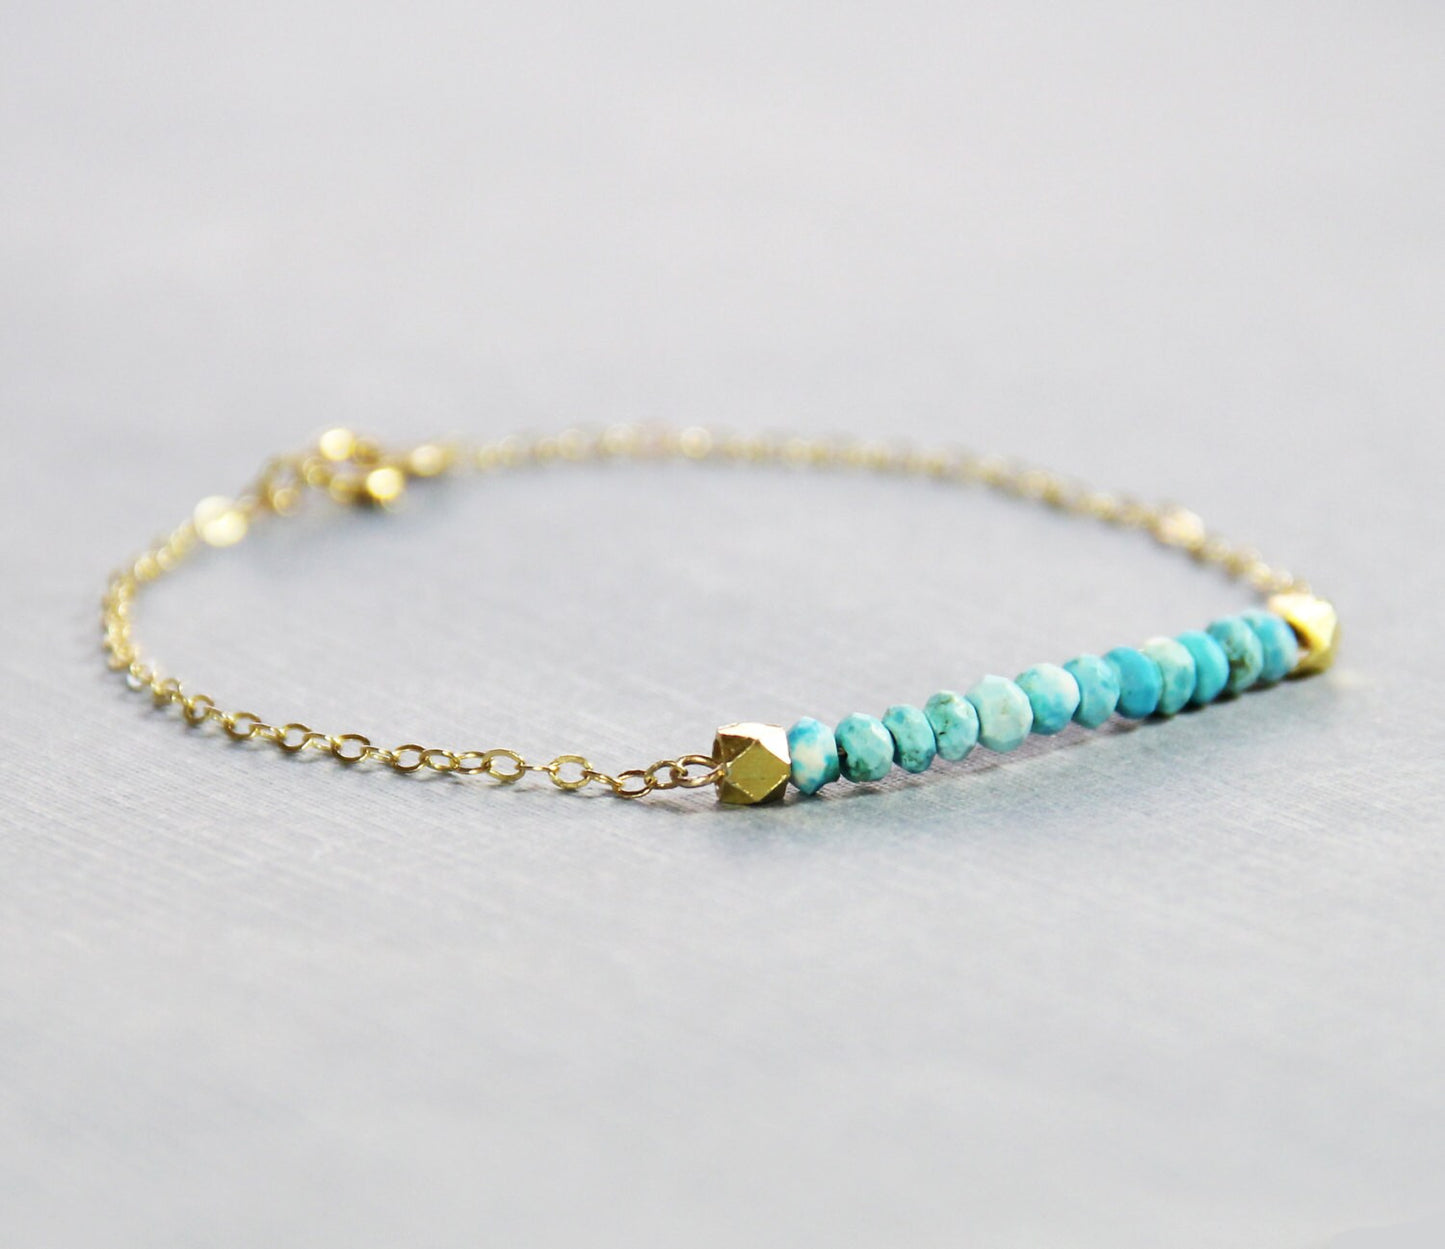 Sleeping Beauty Turquoise and Gold Bracelet - December Birthstone Bracelet - Turquoise Bracelet